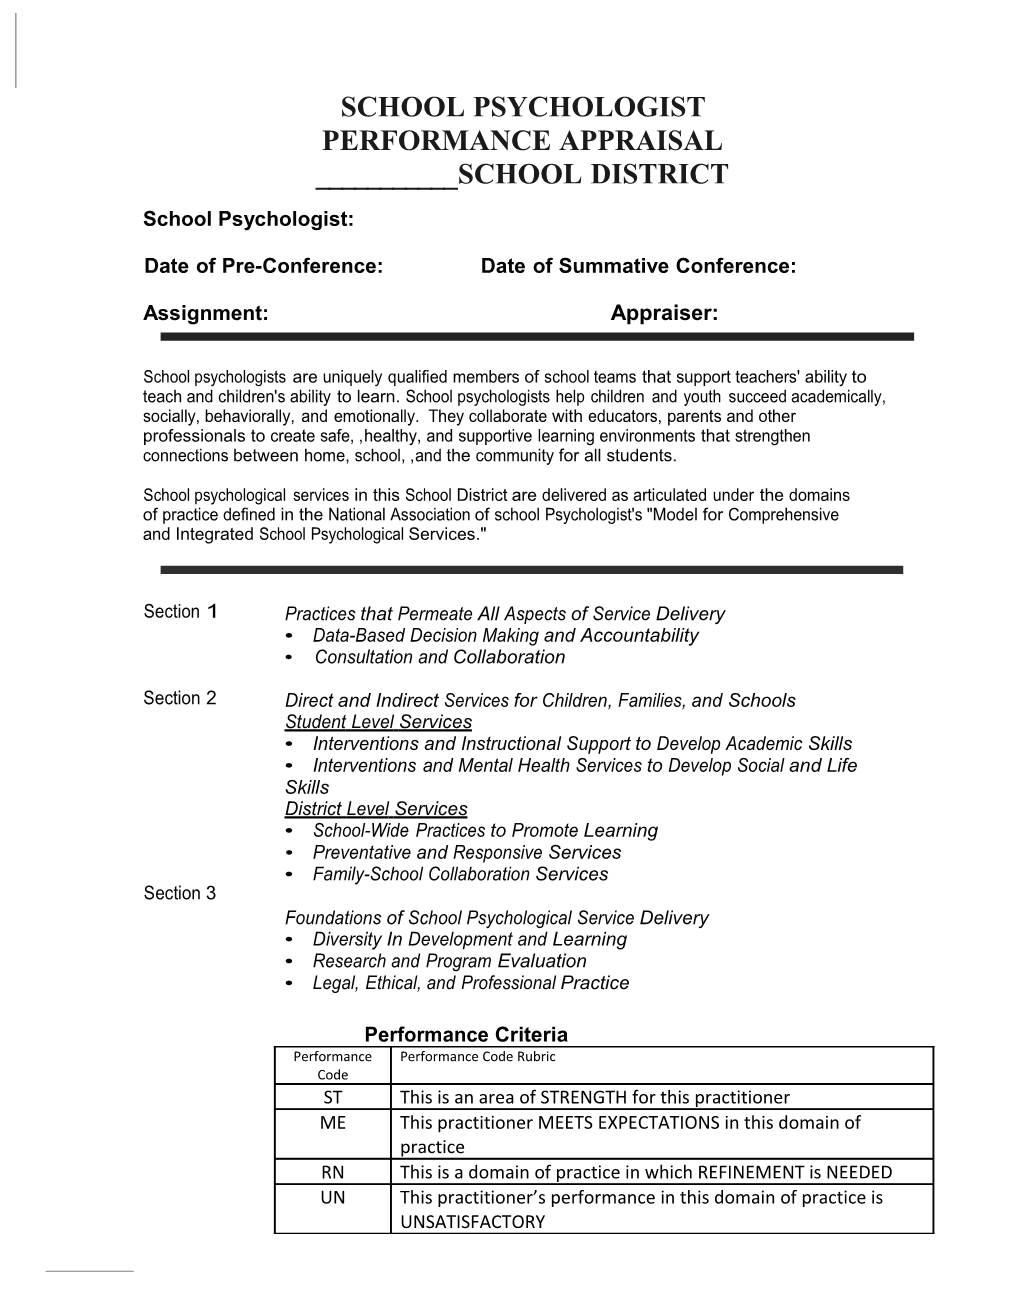 School Psychologist Performance Appraisal ______School District